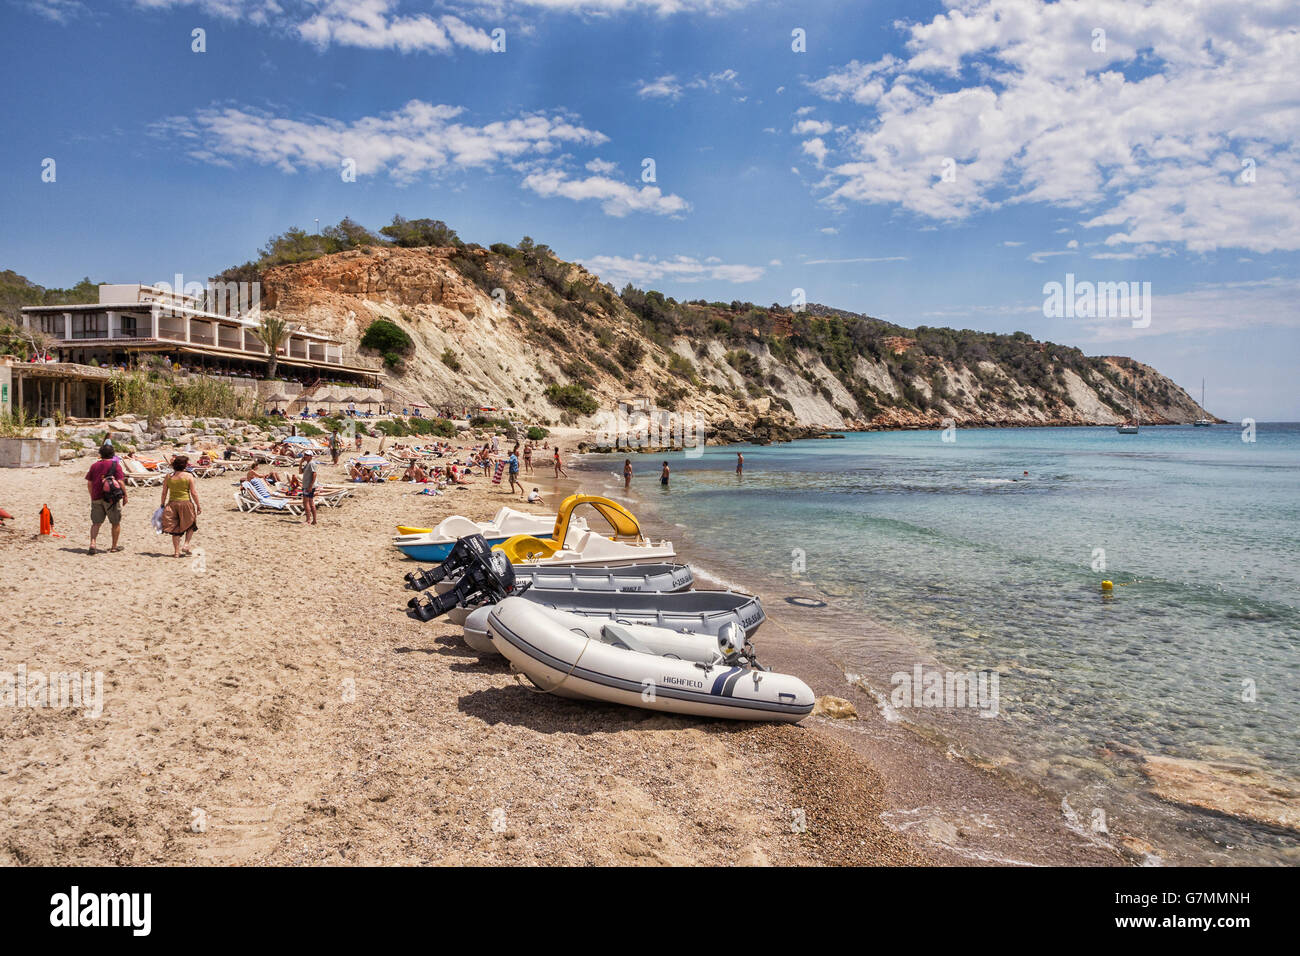 La plage de Cala d'Hort, Ibiza, Espagne. Banque D'Images